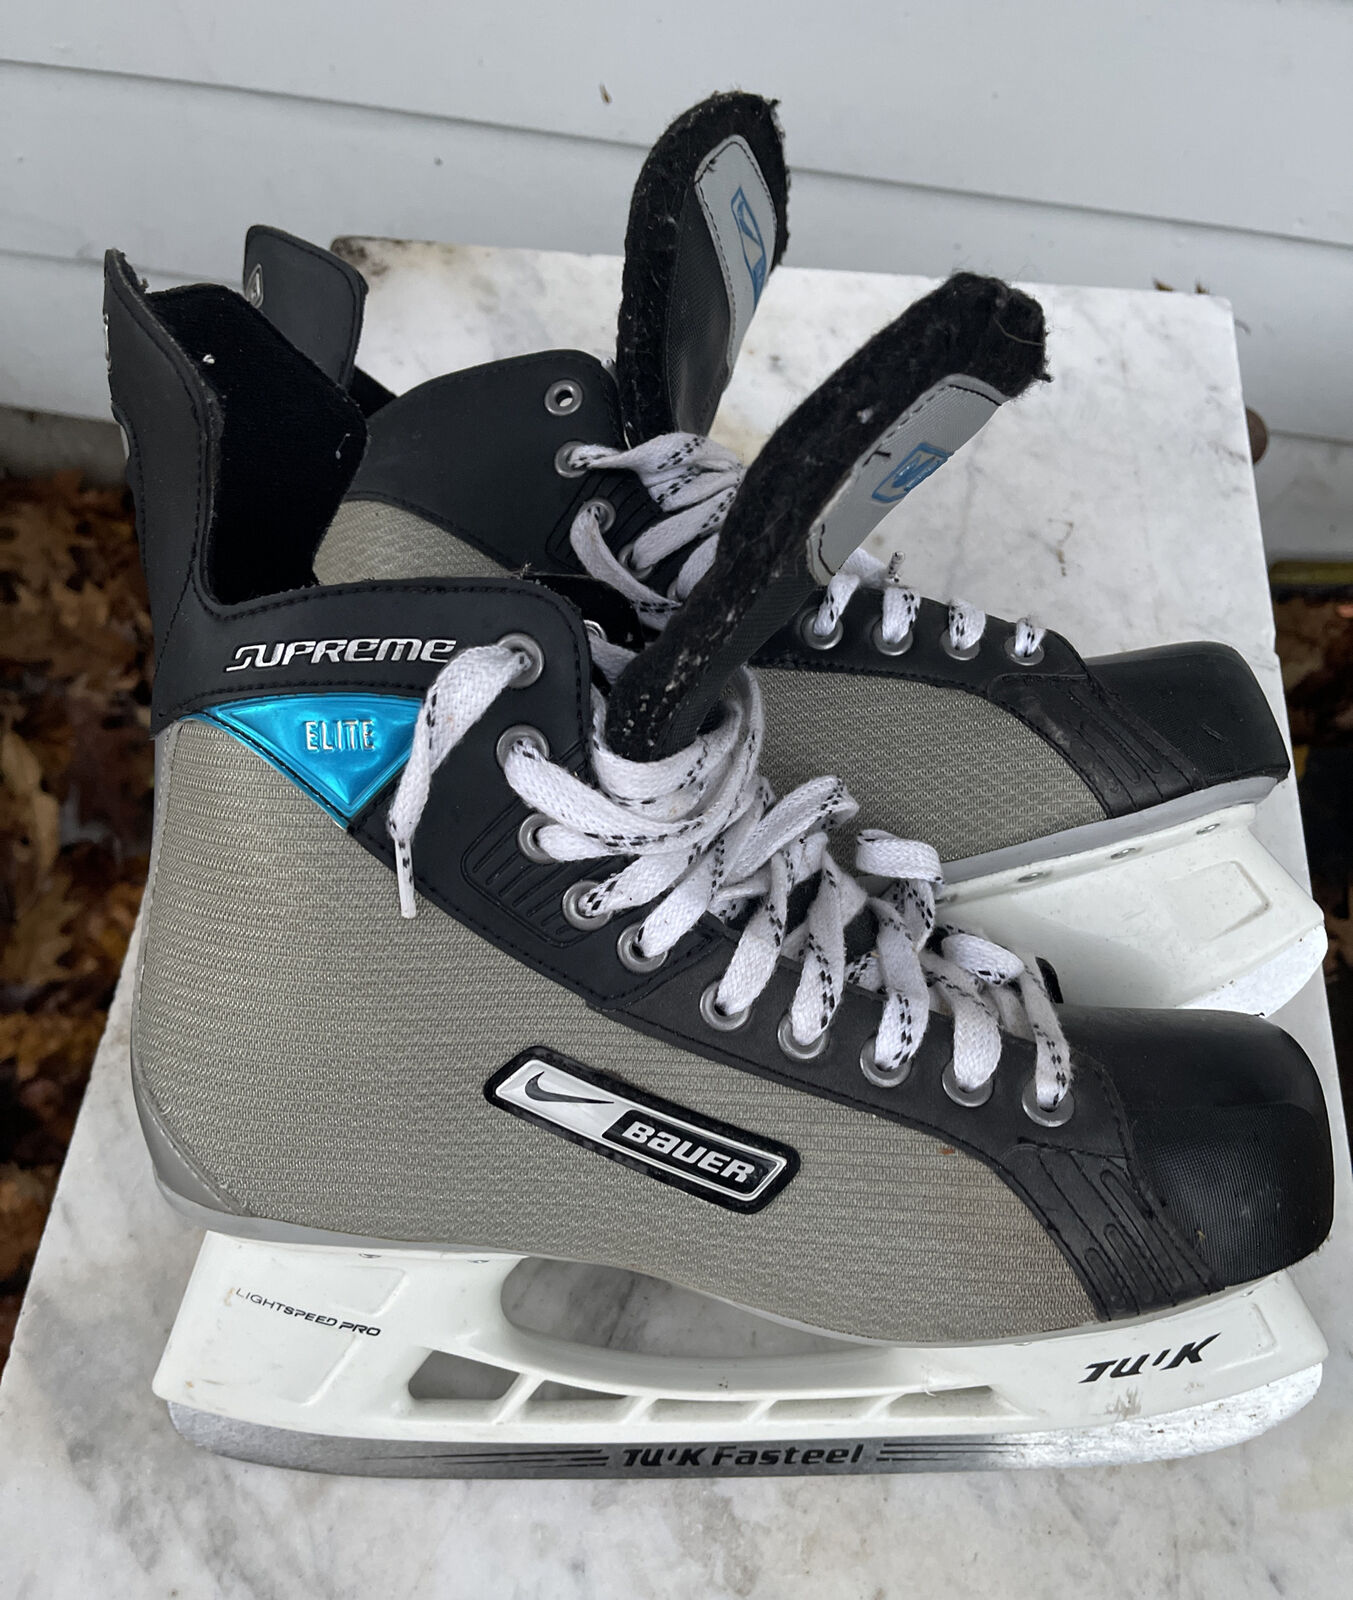 Nike Bauer Supreme Elite Senior Ice Hockey Skates Tuuk Faststeel Size 10